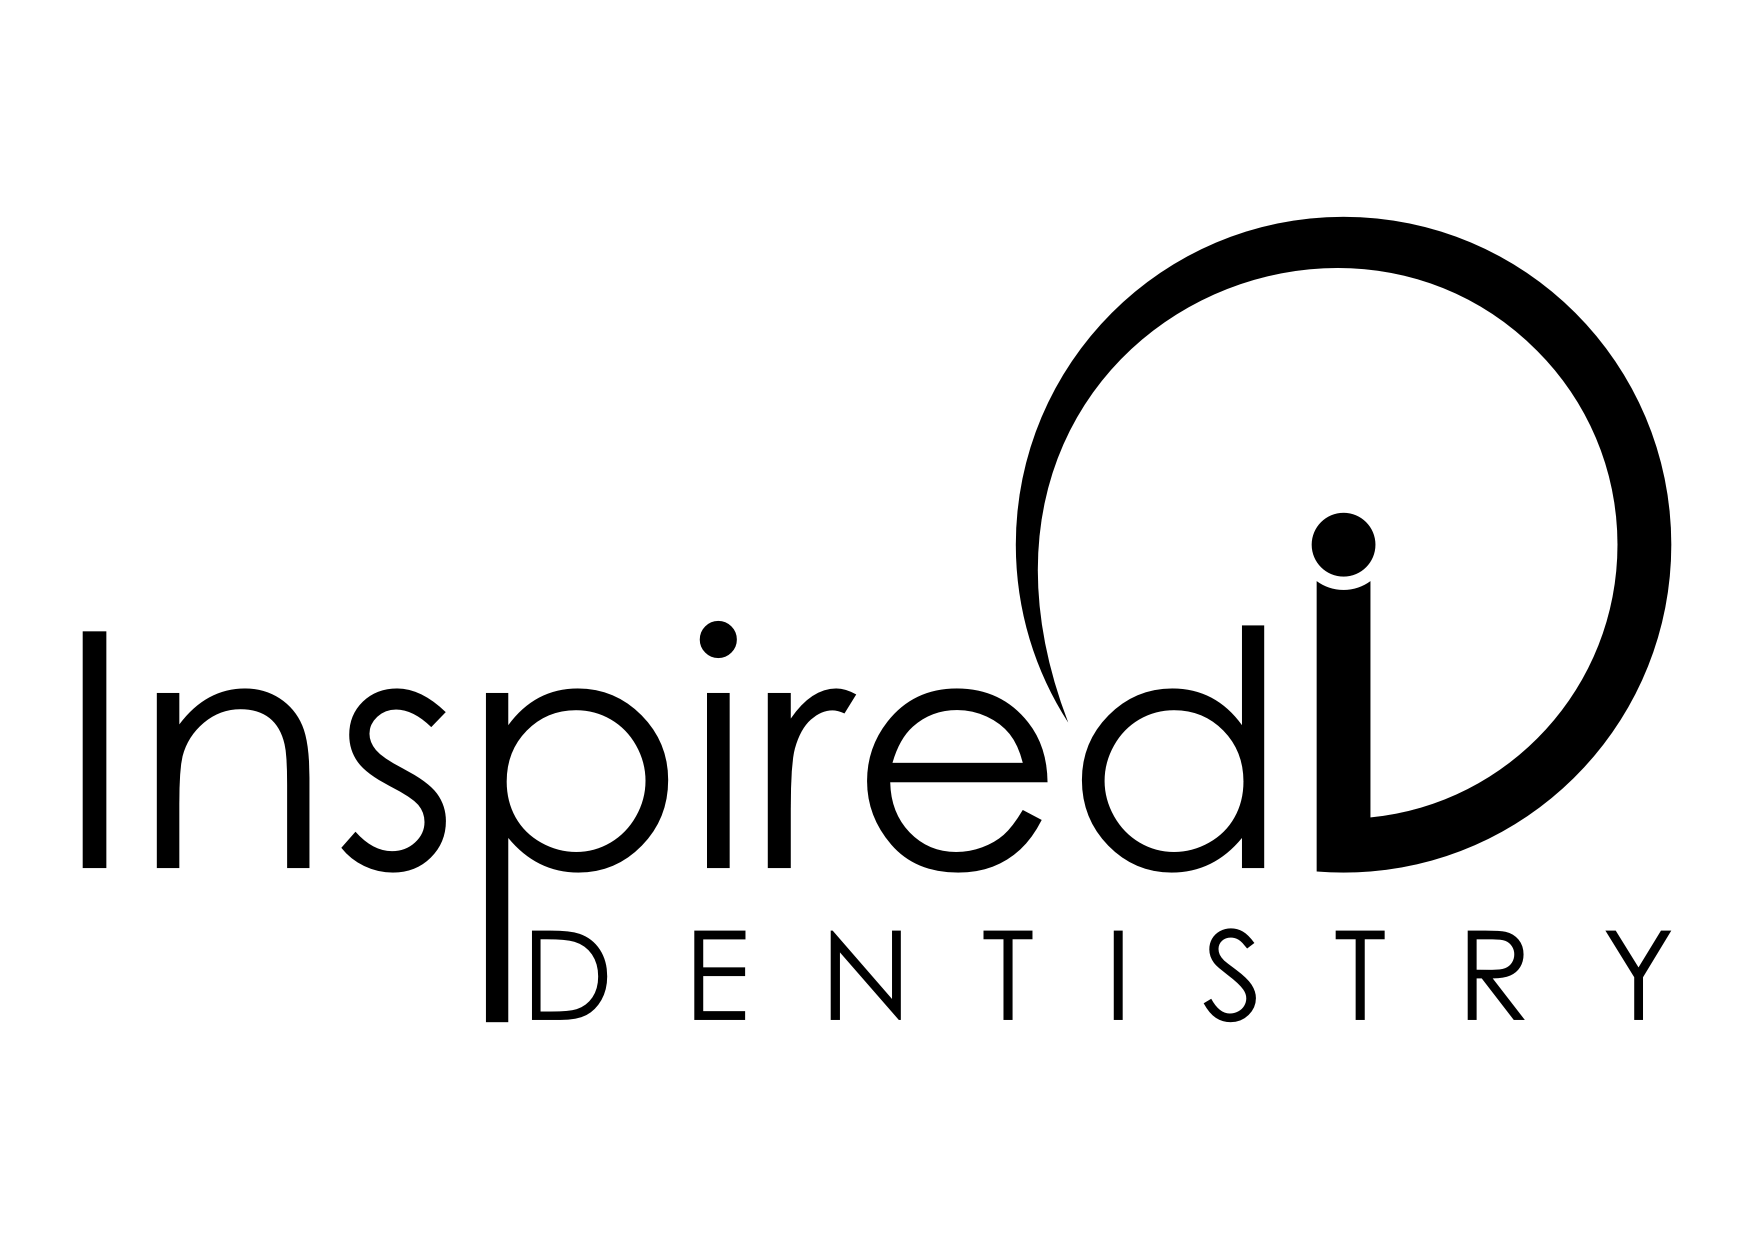 Inspired Dentistry